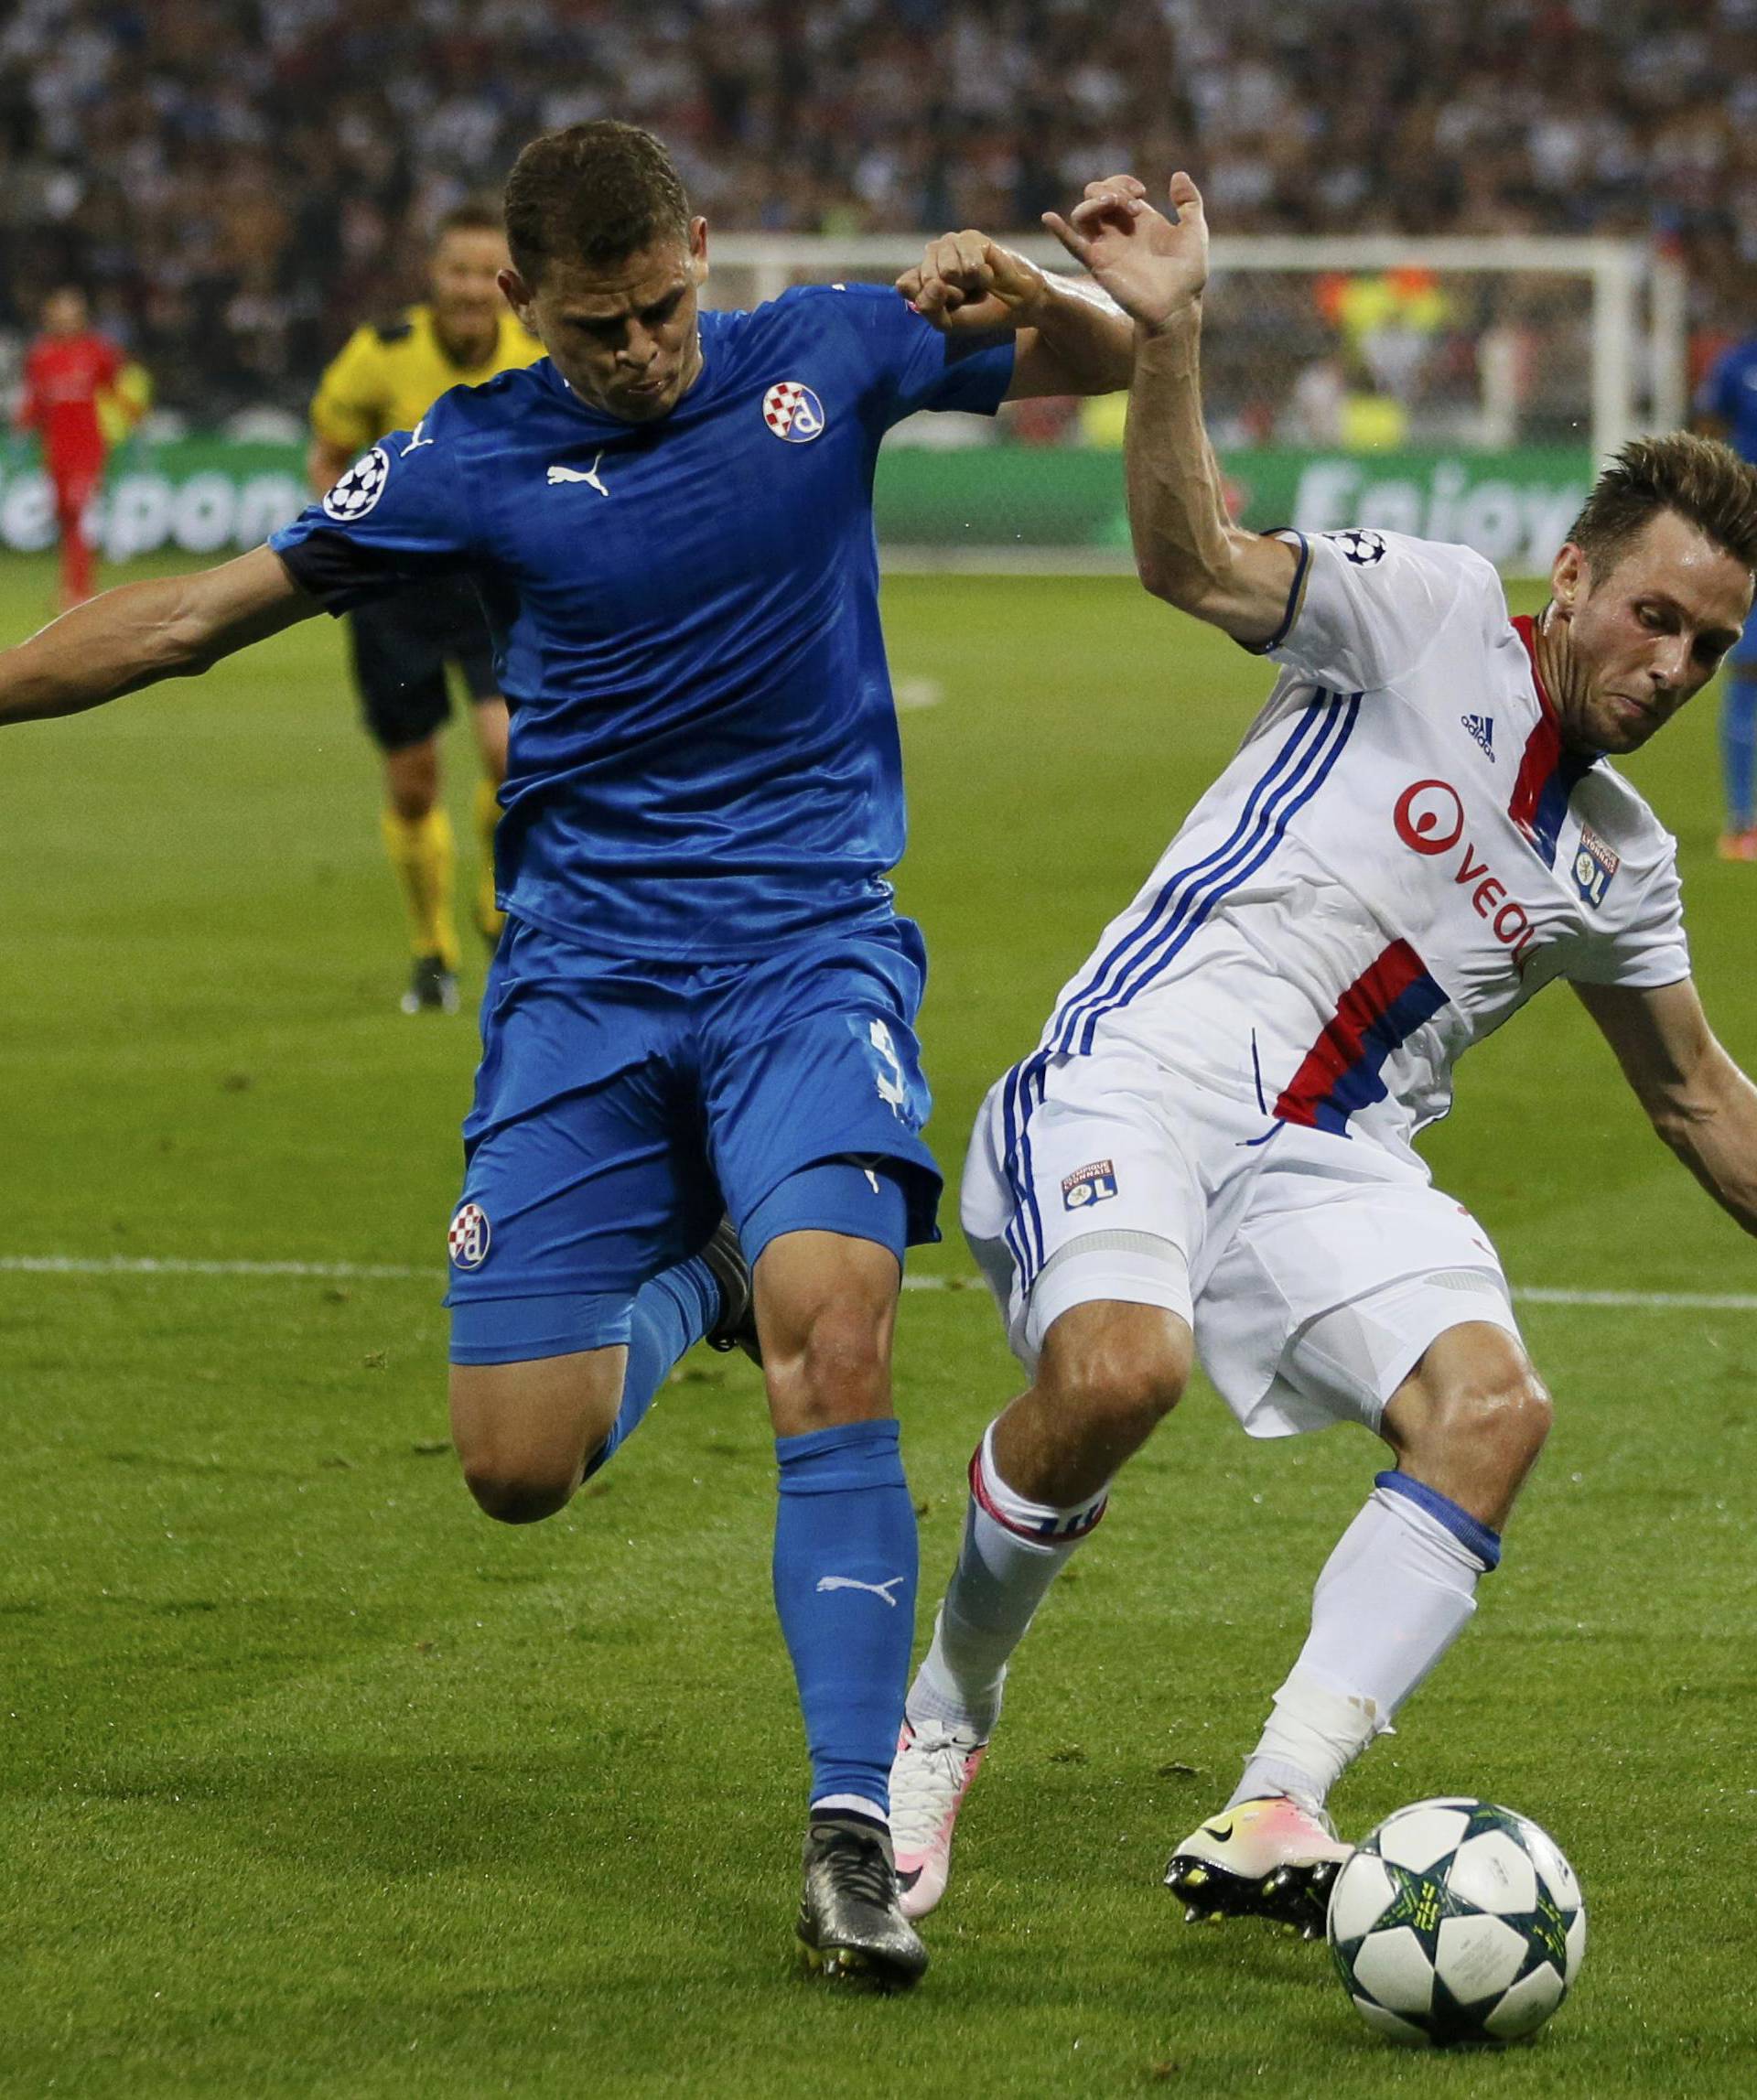 Dinamo Zagreb's Jonas in action with Olympique Lyon's Nicolas Nkoulou